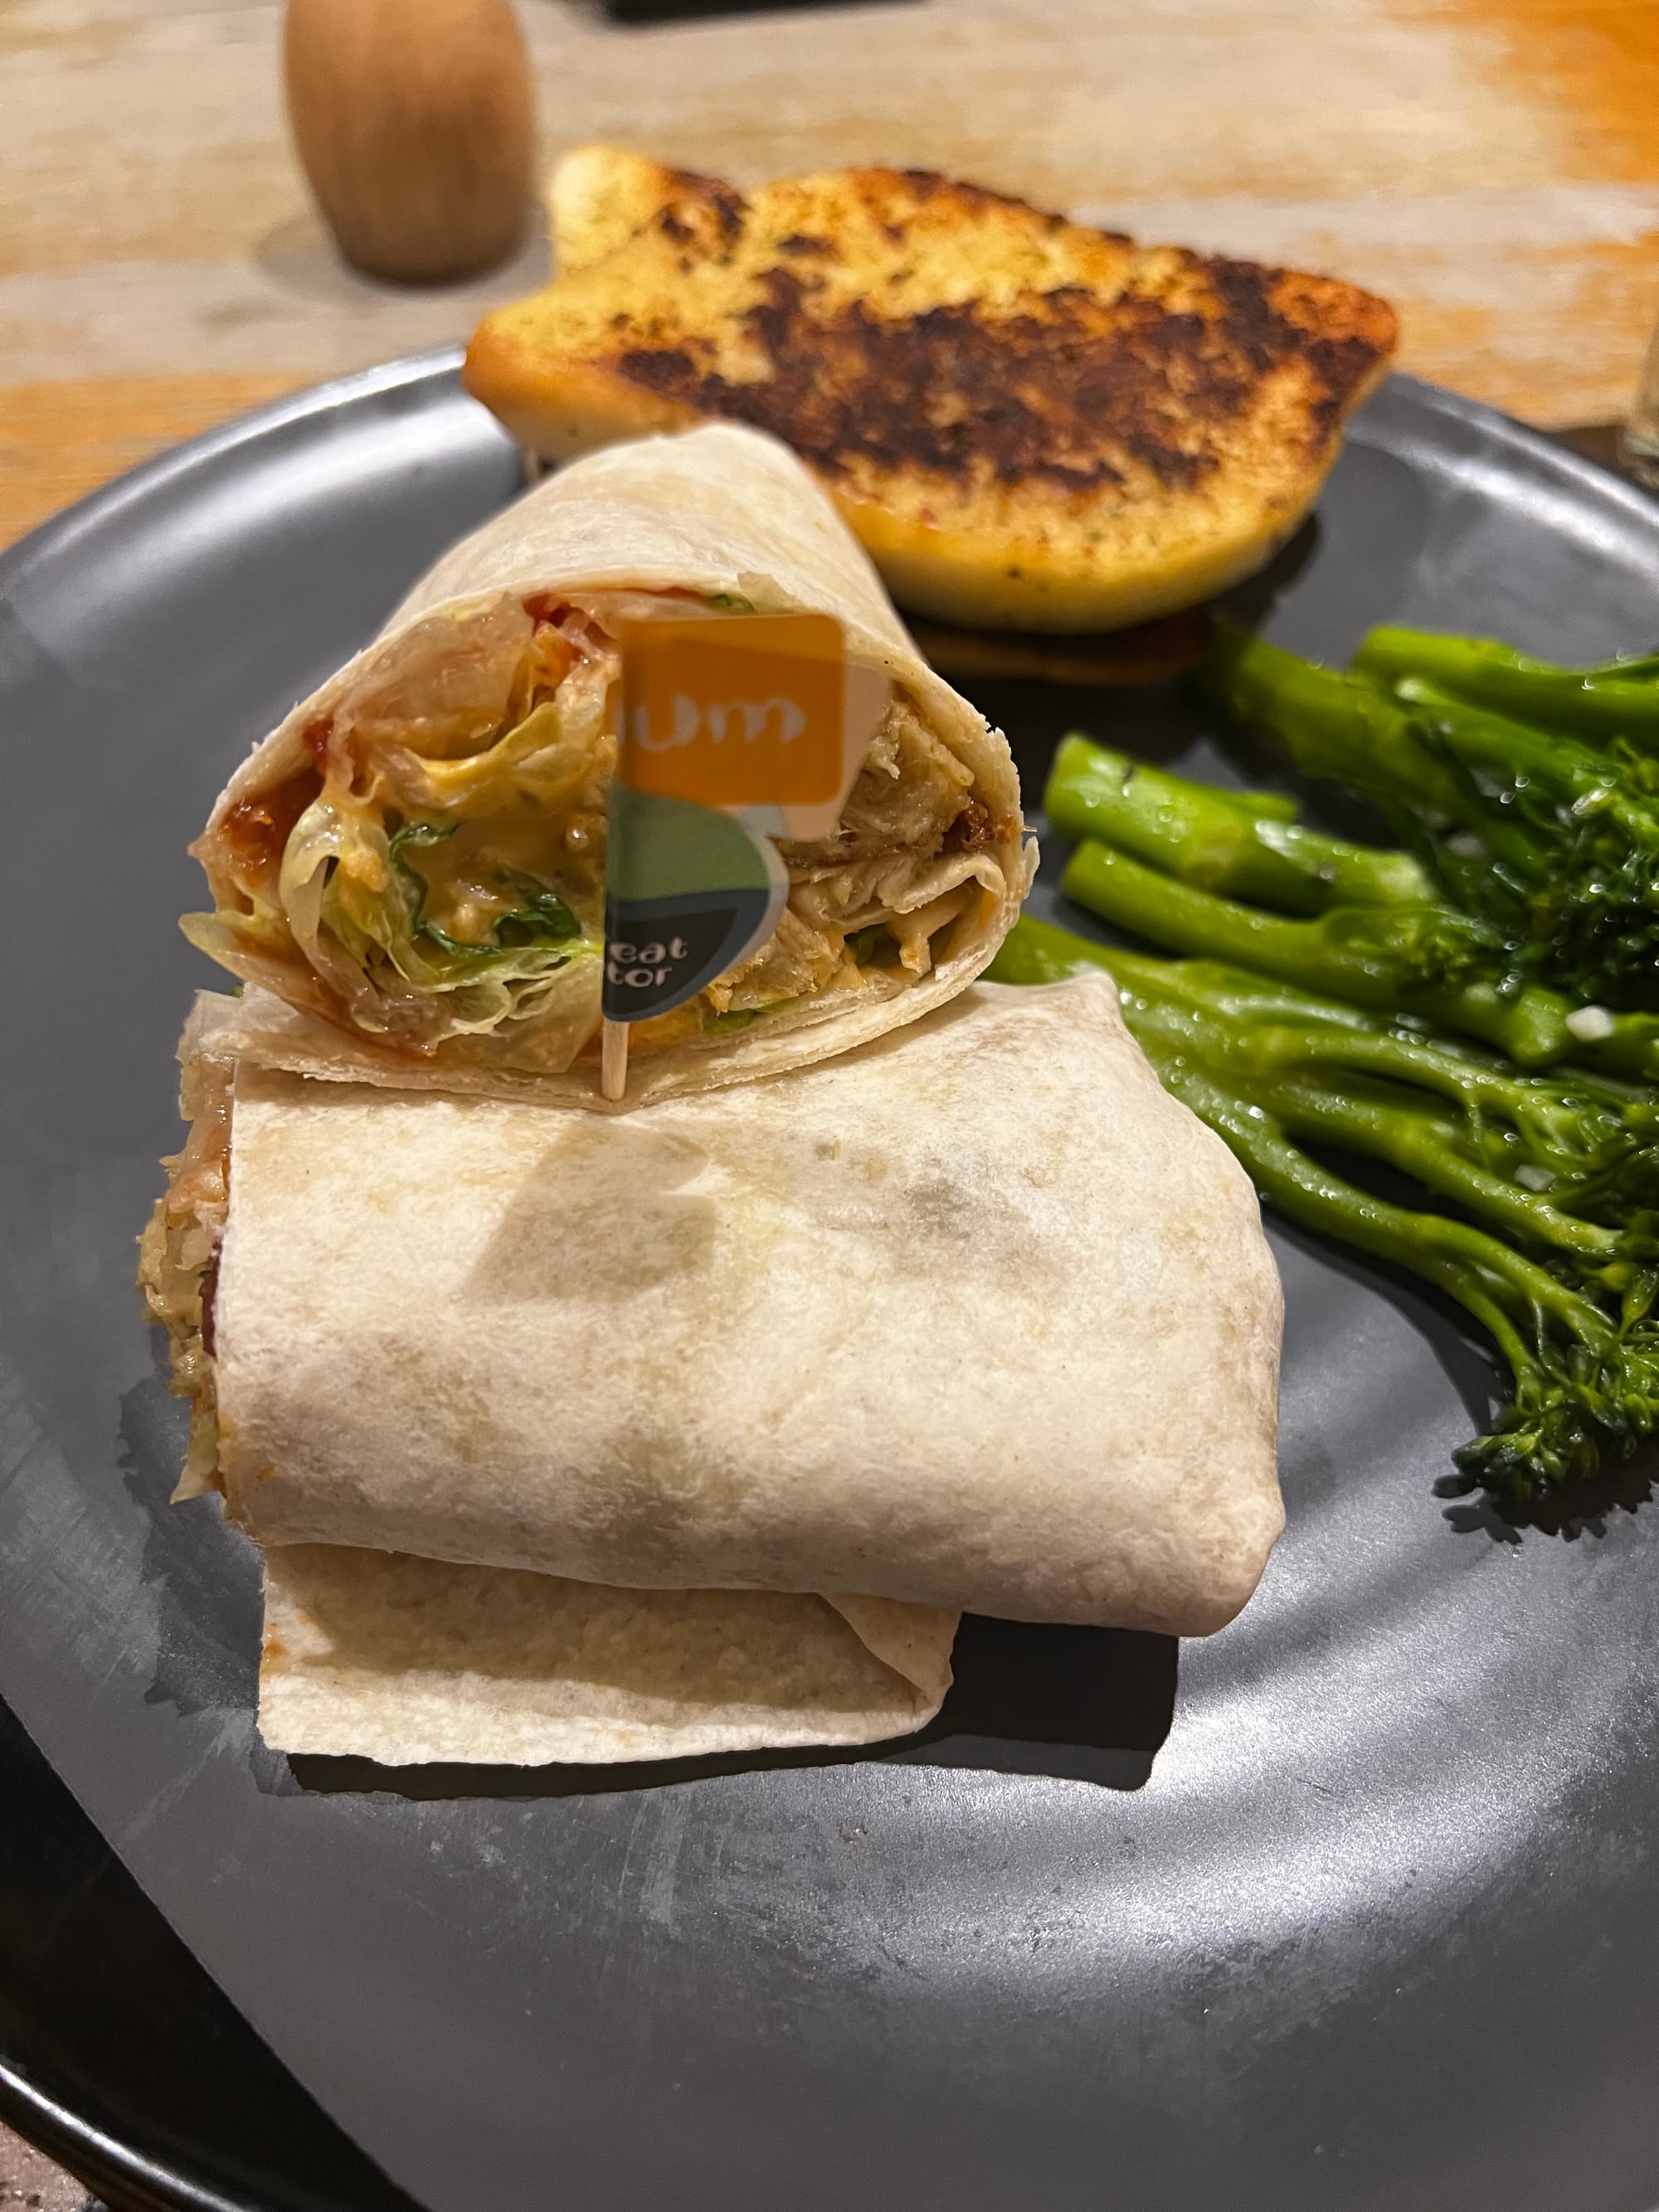 A plate of Nando's food: the Great Imitator wrap, broccoli, and garlic bread.